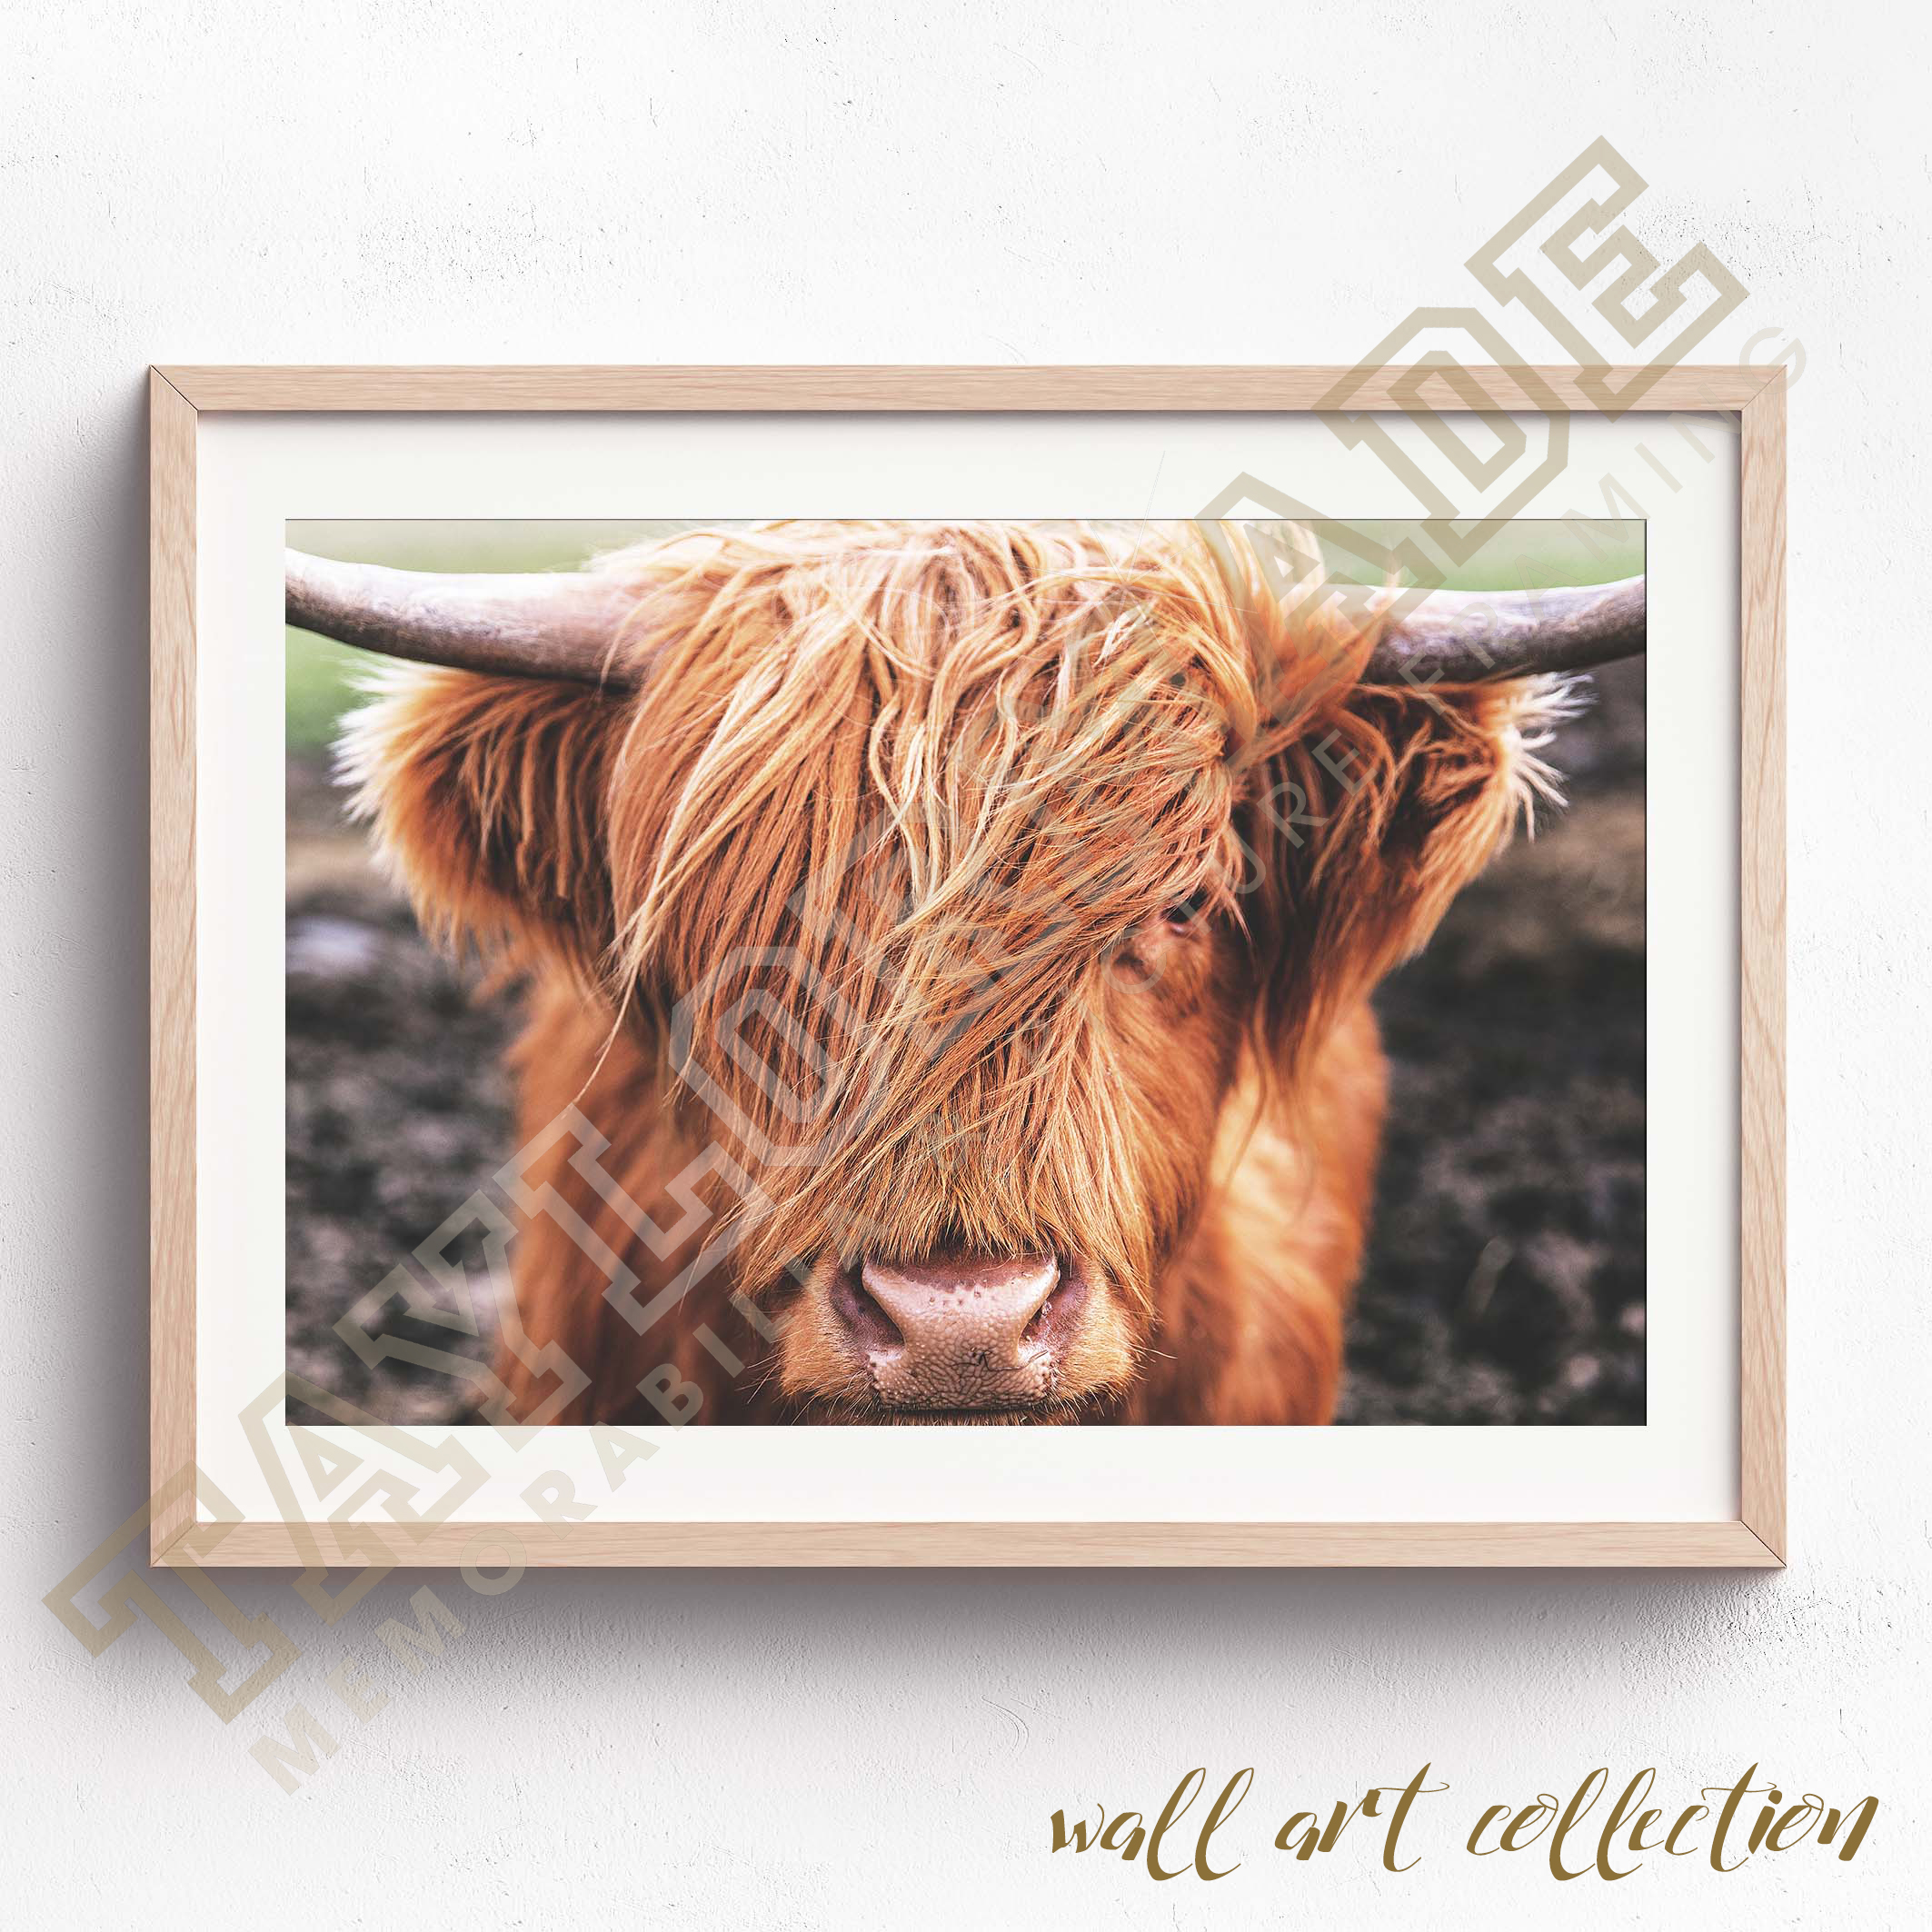 Wall Art Collection – Highlander